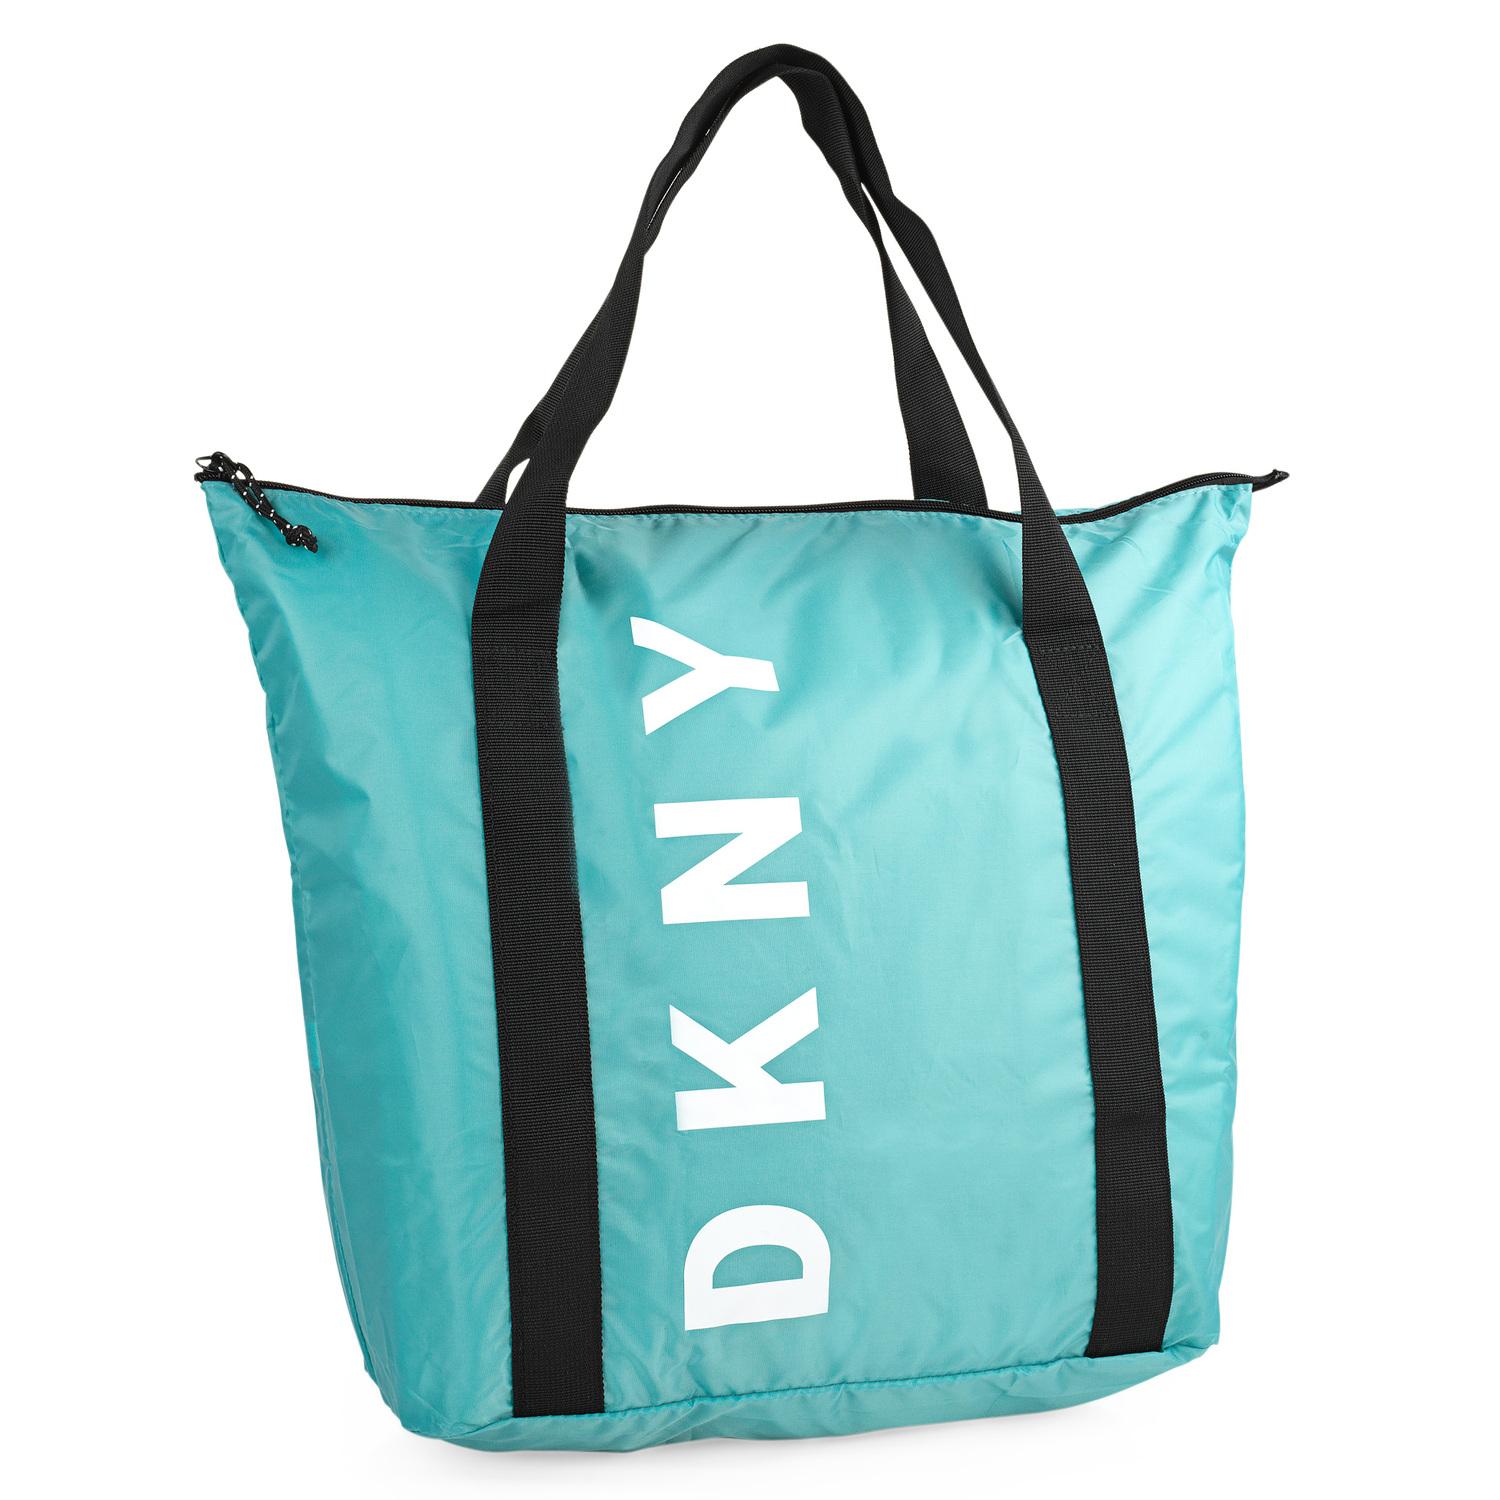 Dkny Women's Bag Blue 100% Leather